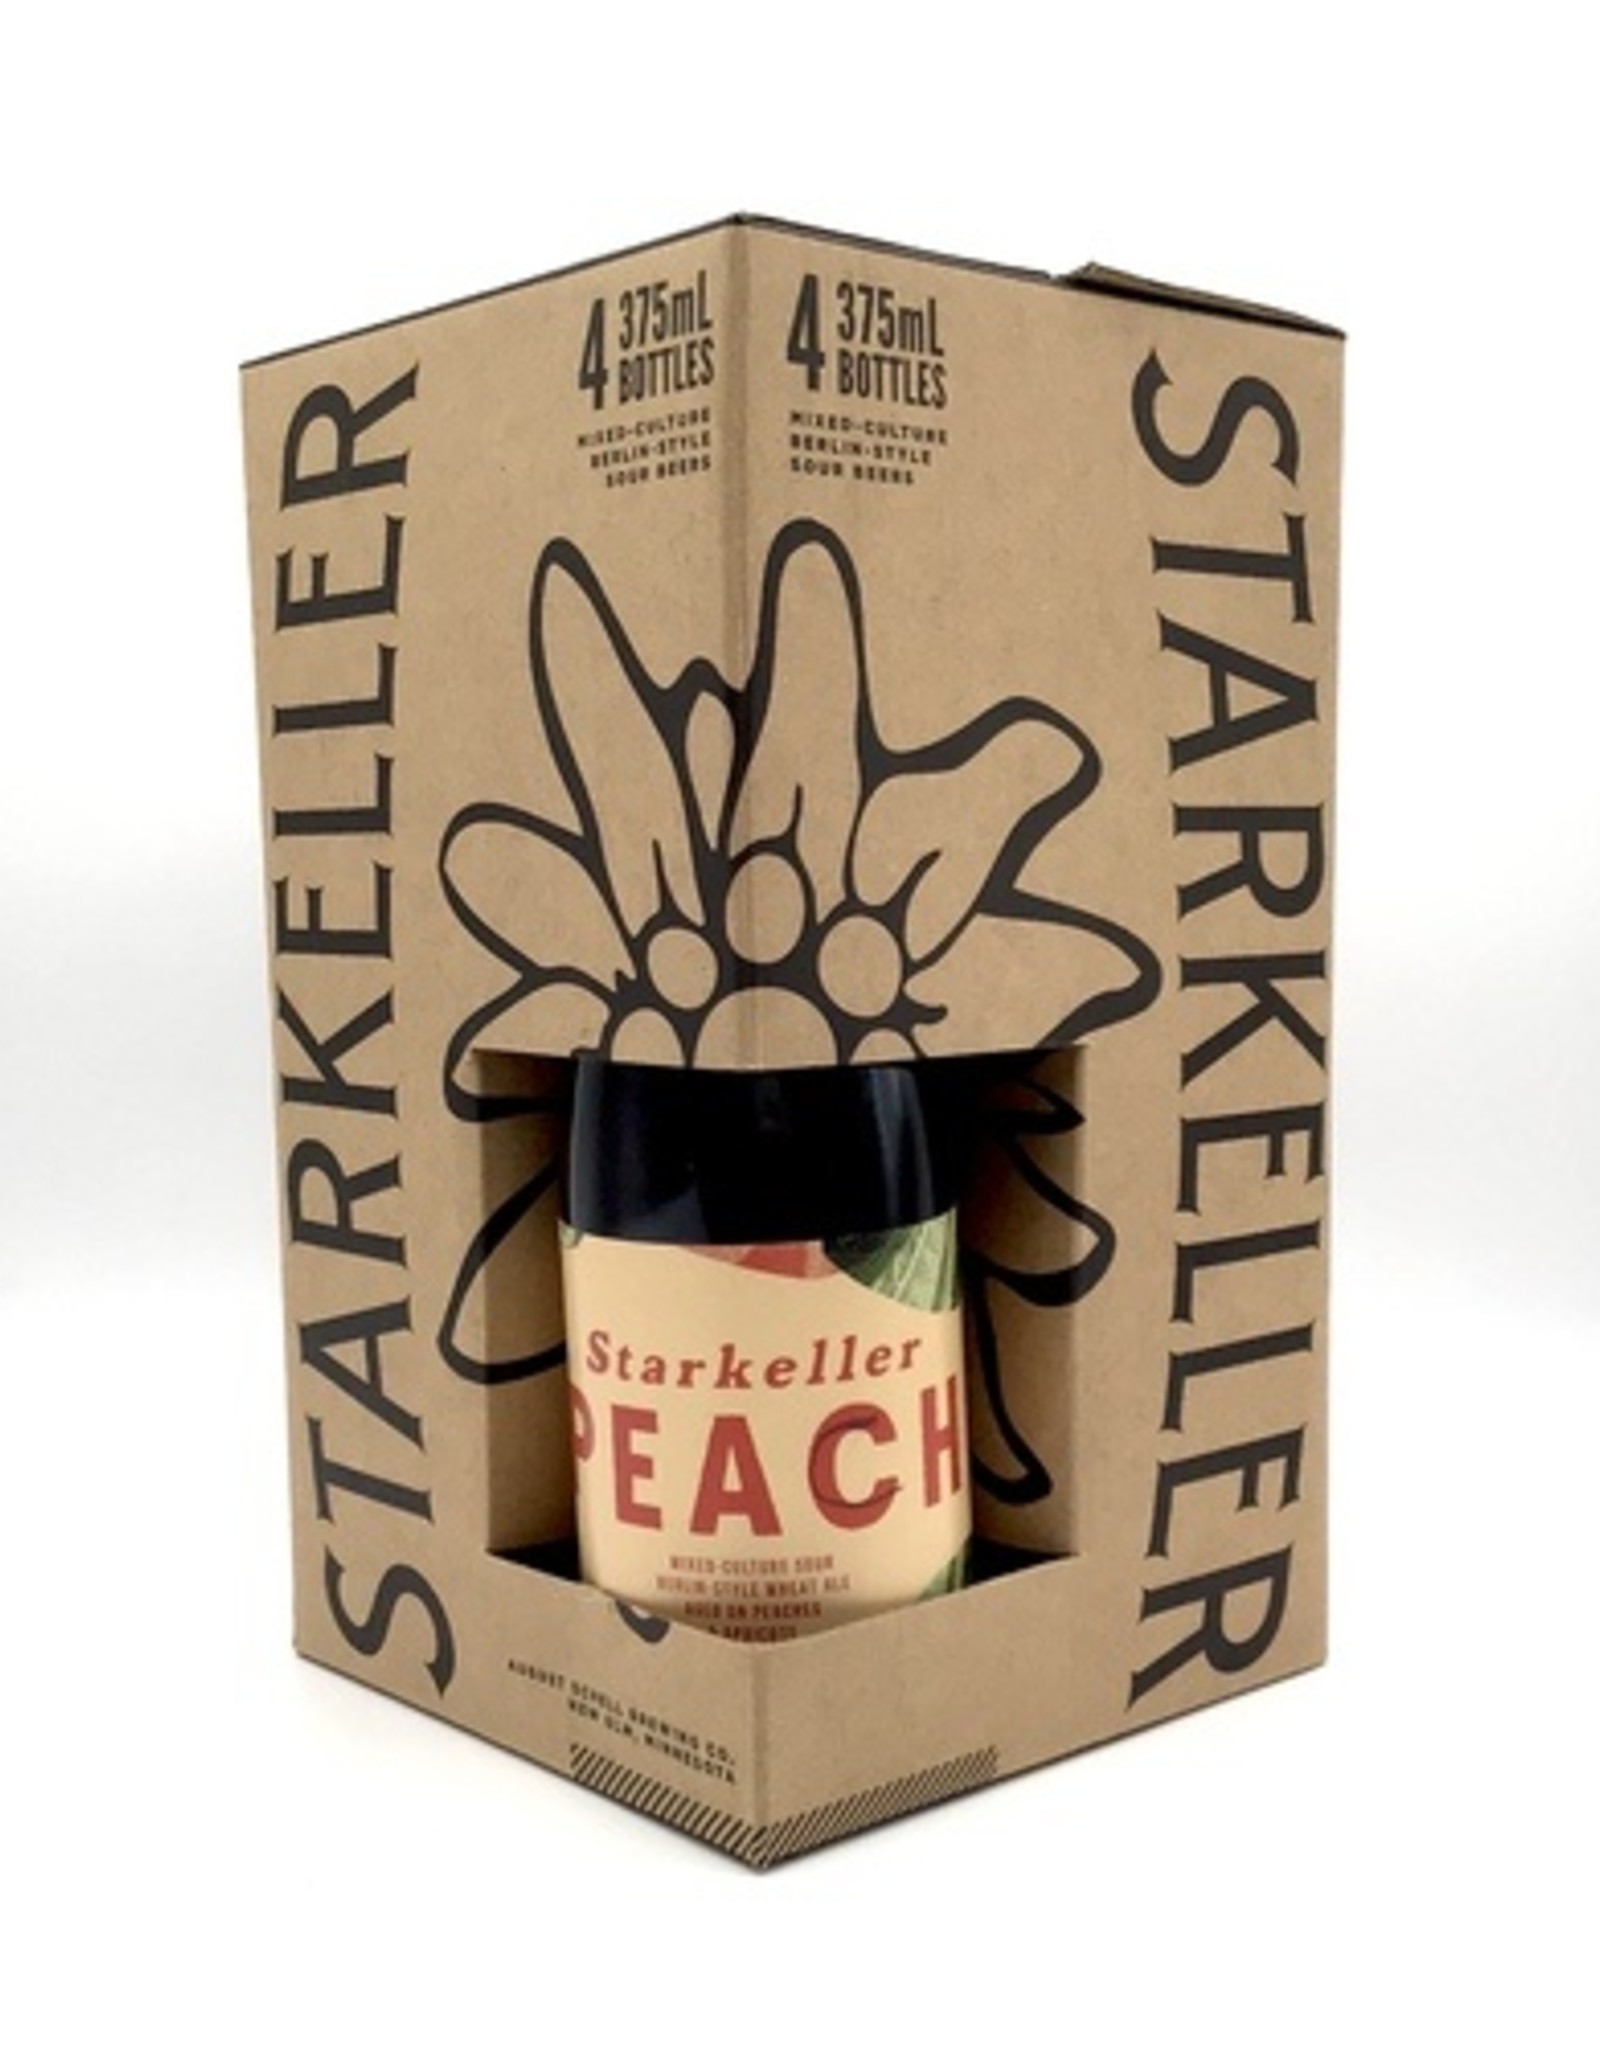 Schell's Starkeller Peach 4x375 mL bottles